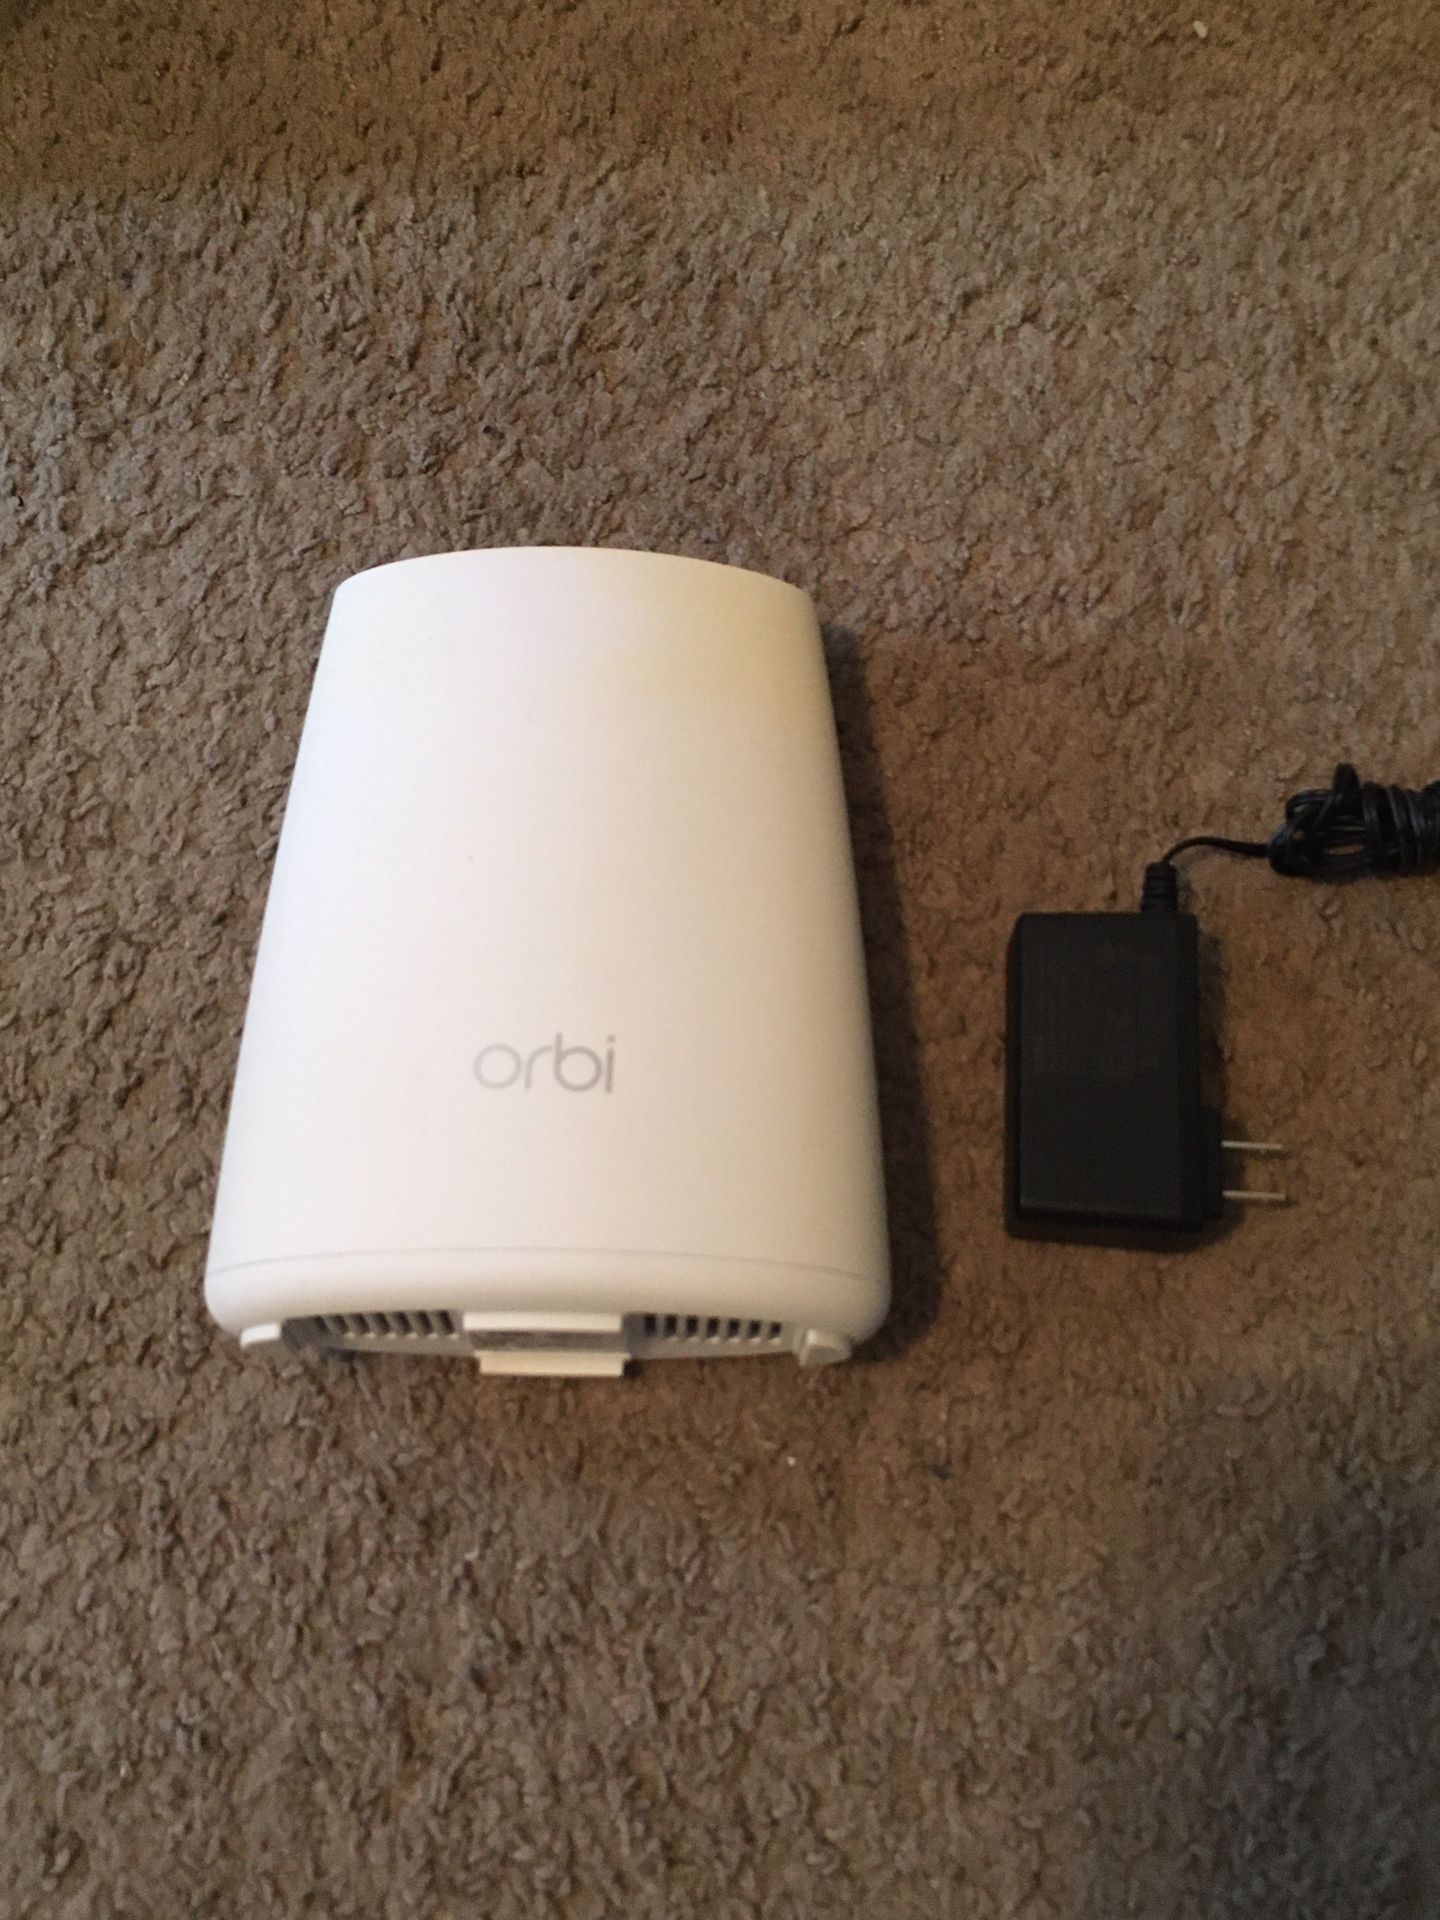 Orbi Wifi Wireless Router 